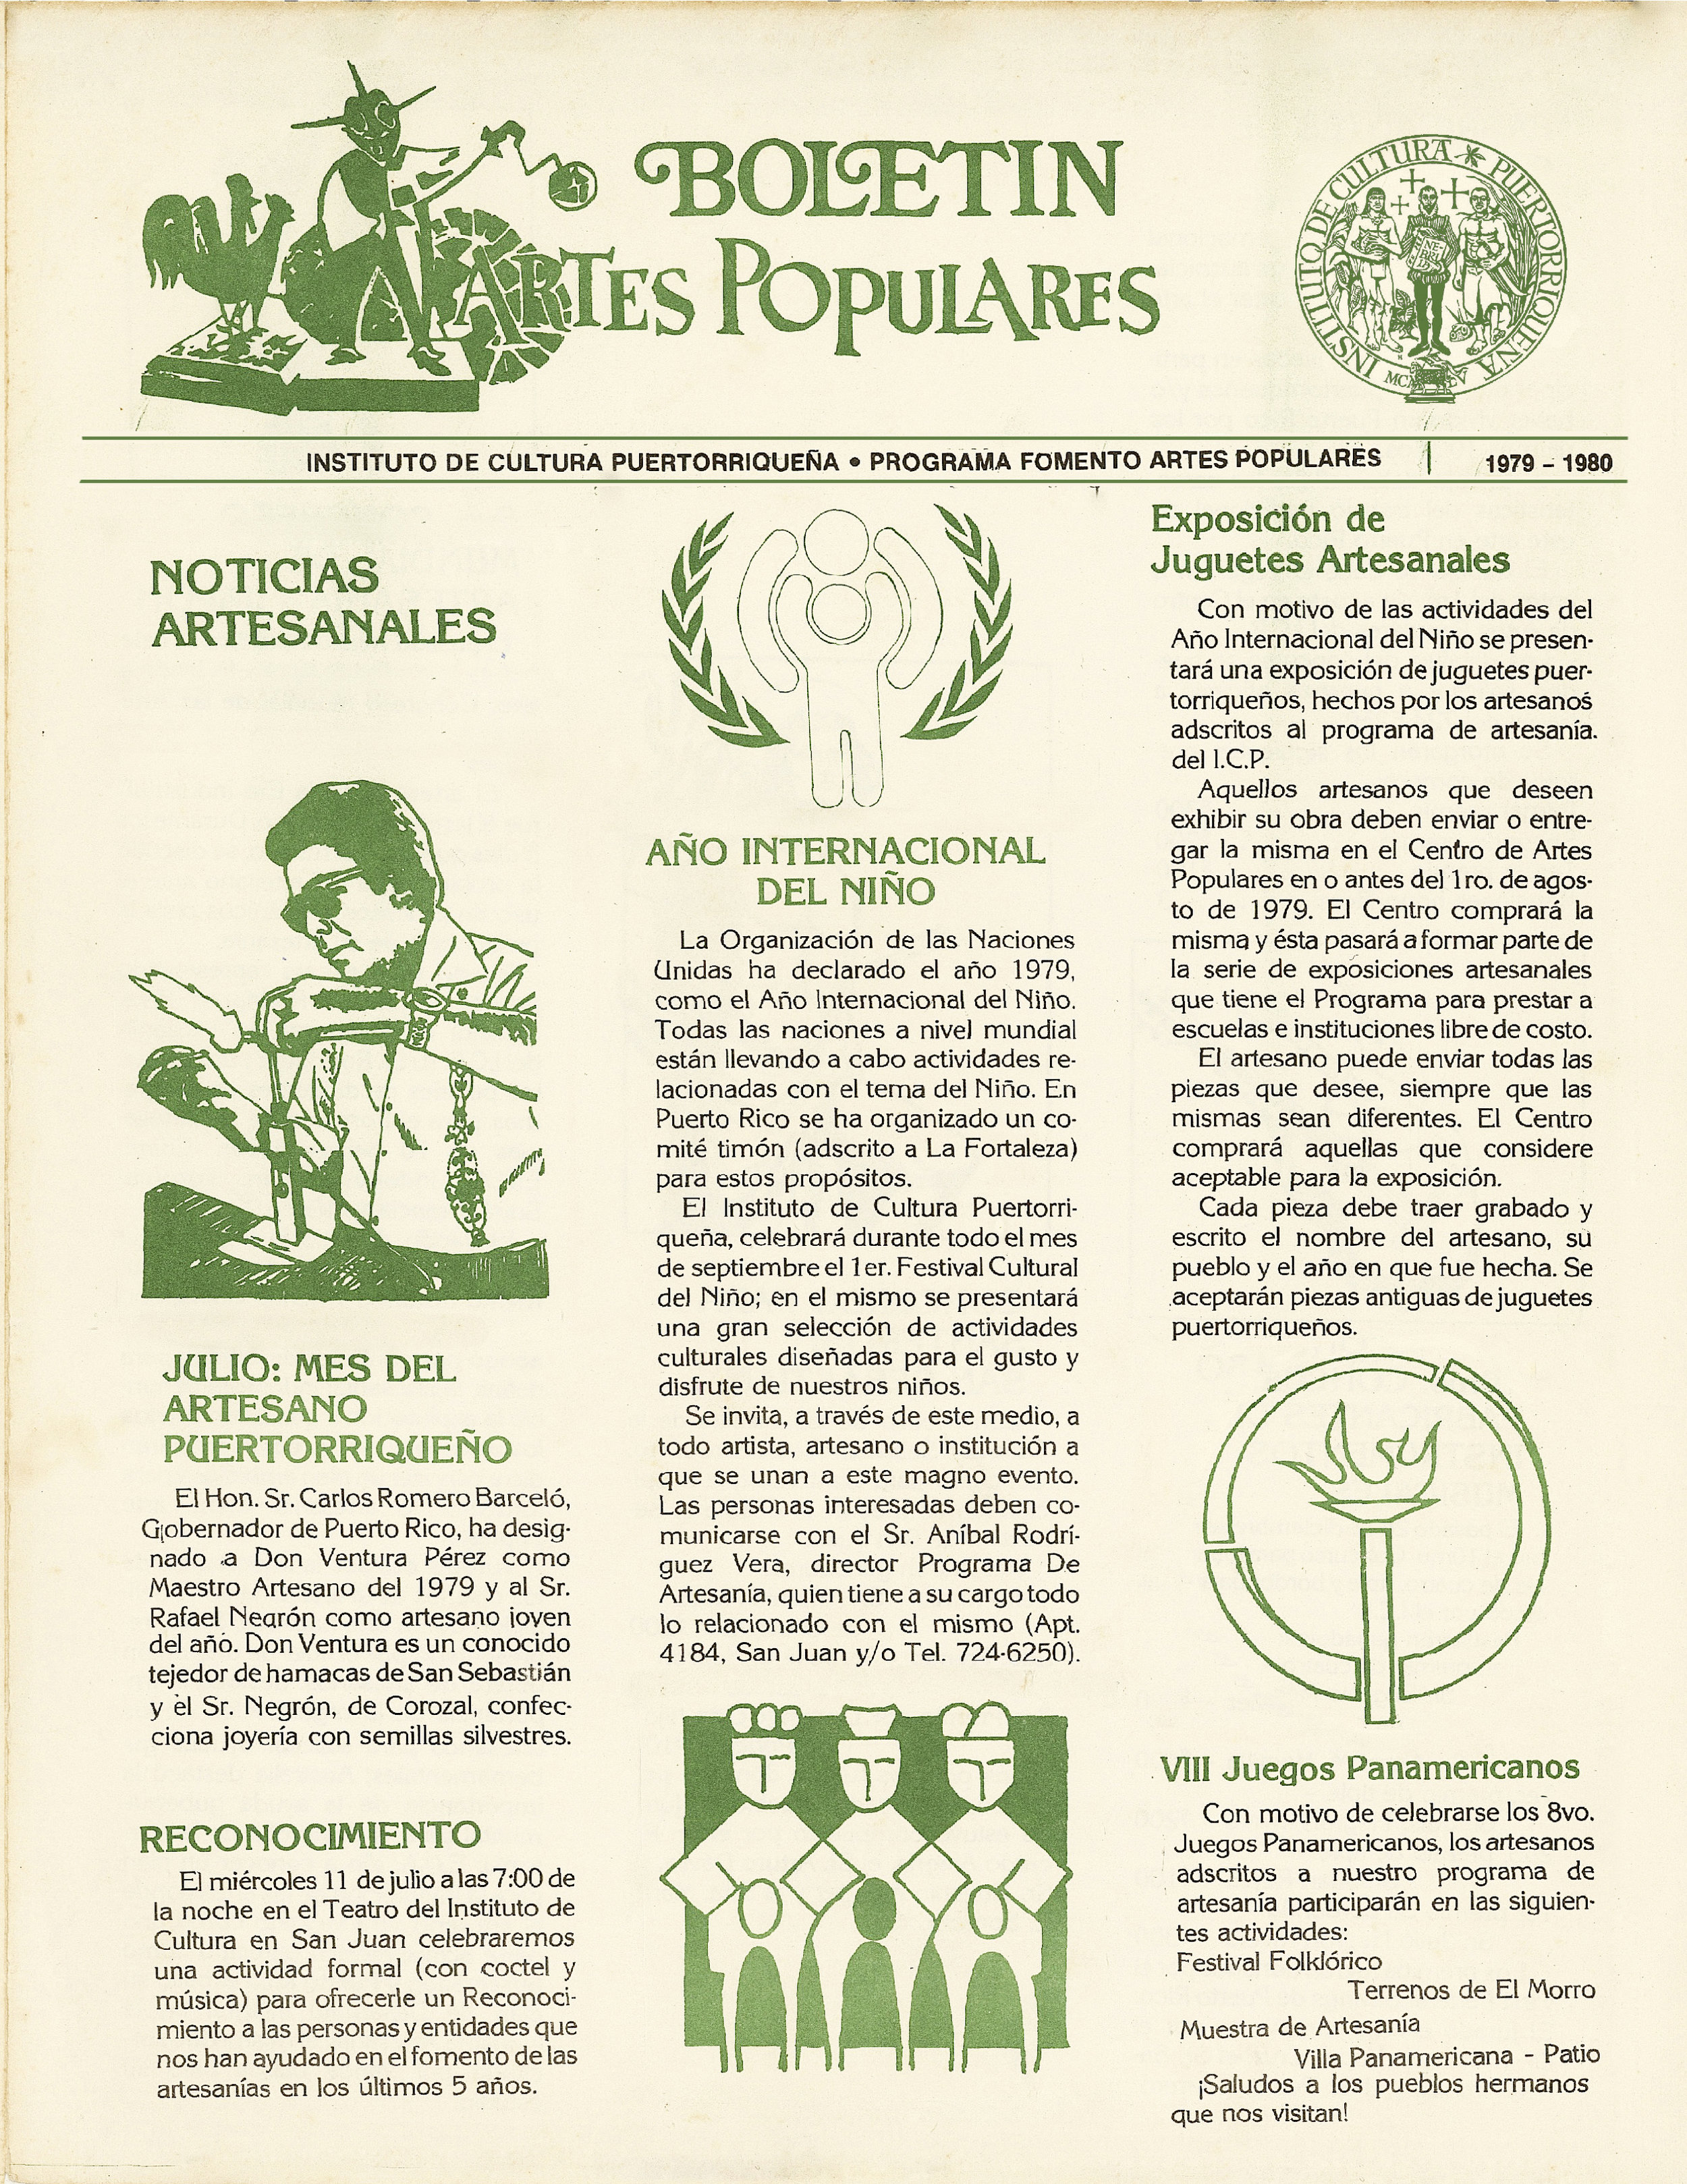 Boletín de Artes Populares-79-80 SUMPLEMENTO 1.jpg